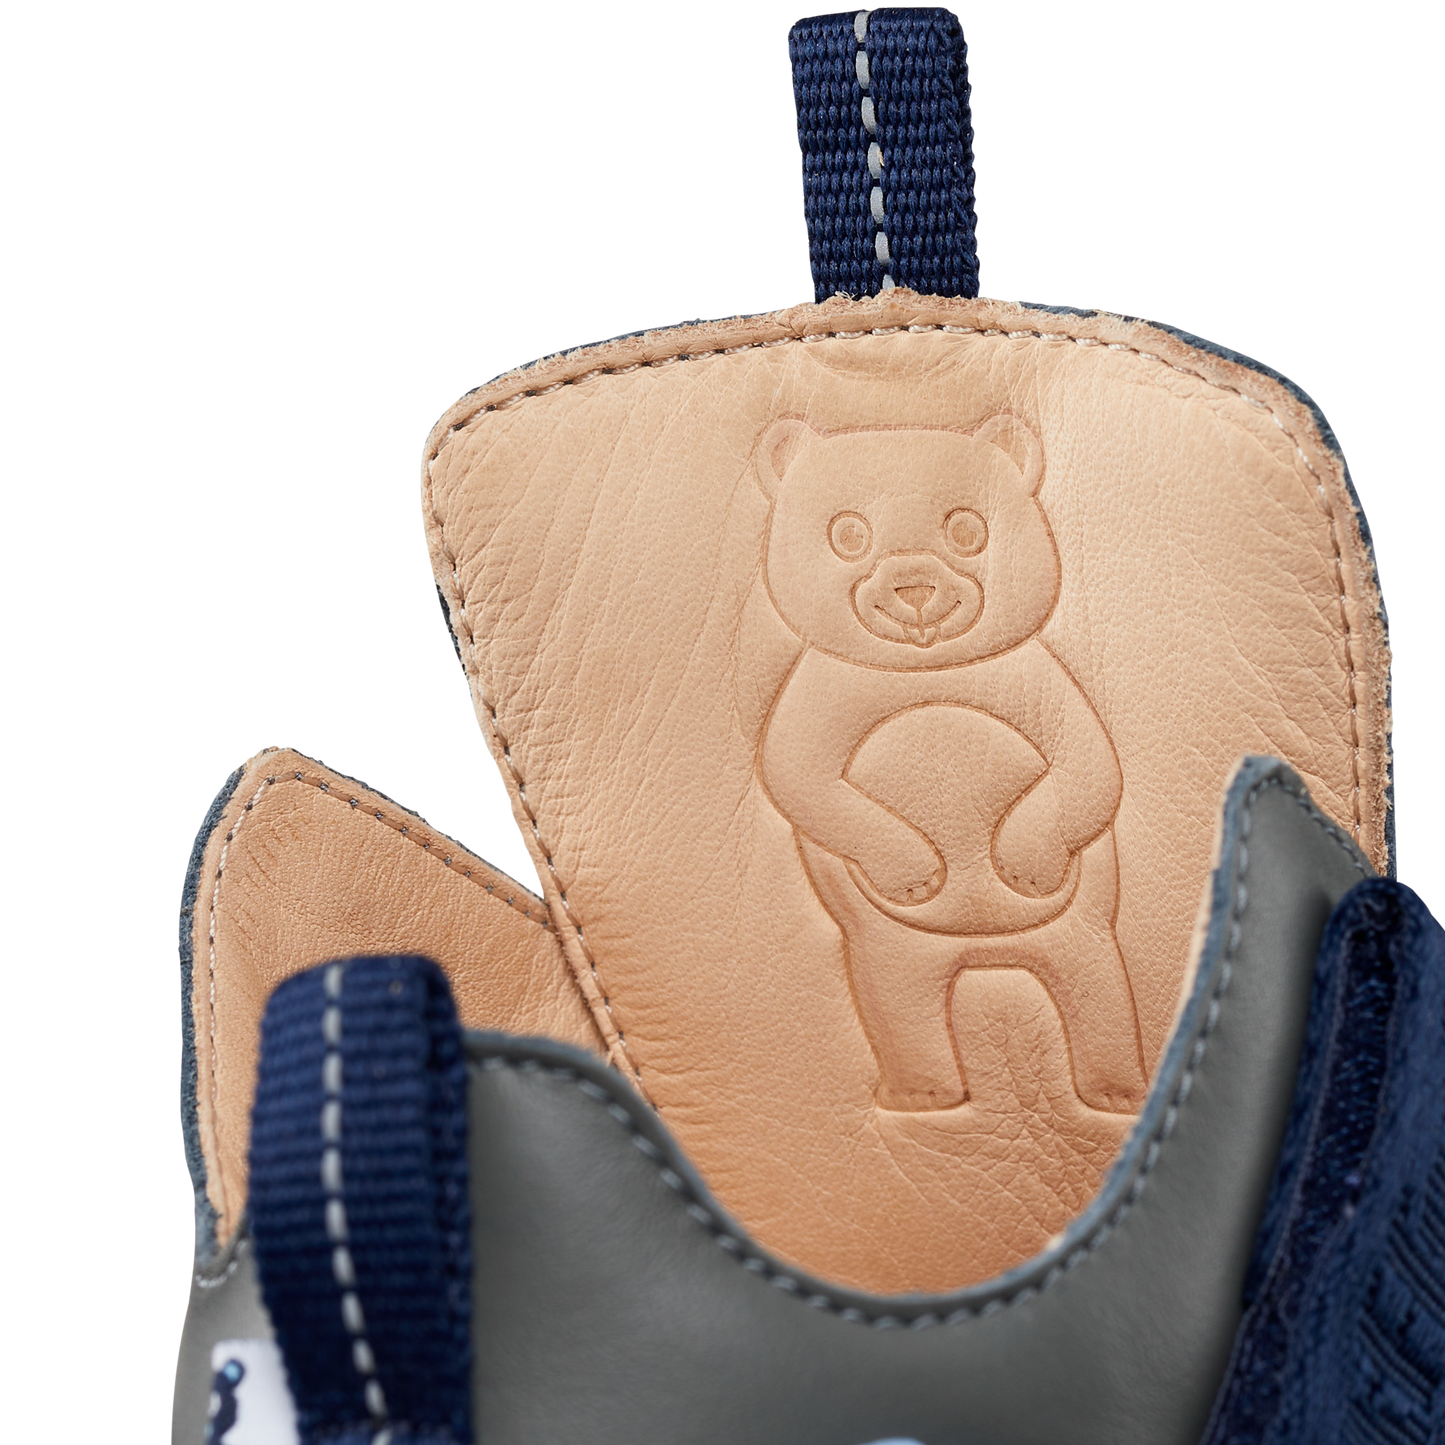 Affenzahn Leather Buddy barfods overgangssko til børn i farven bear / darker blue, detalje